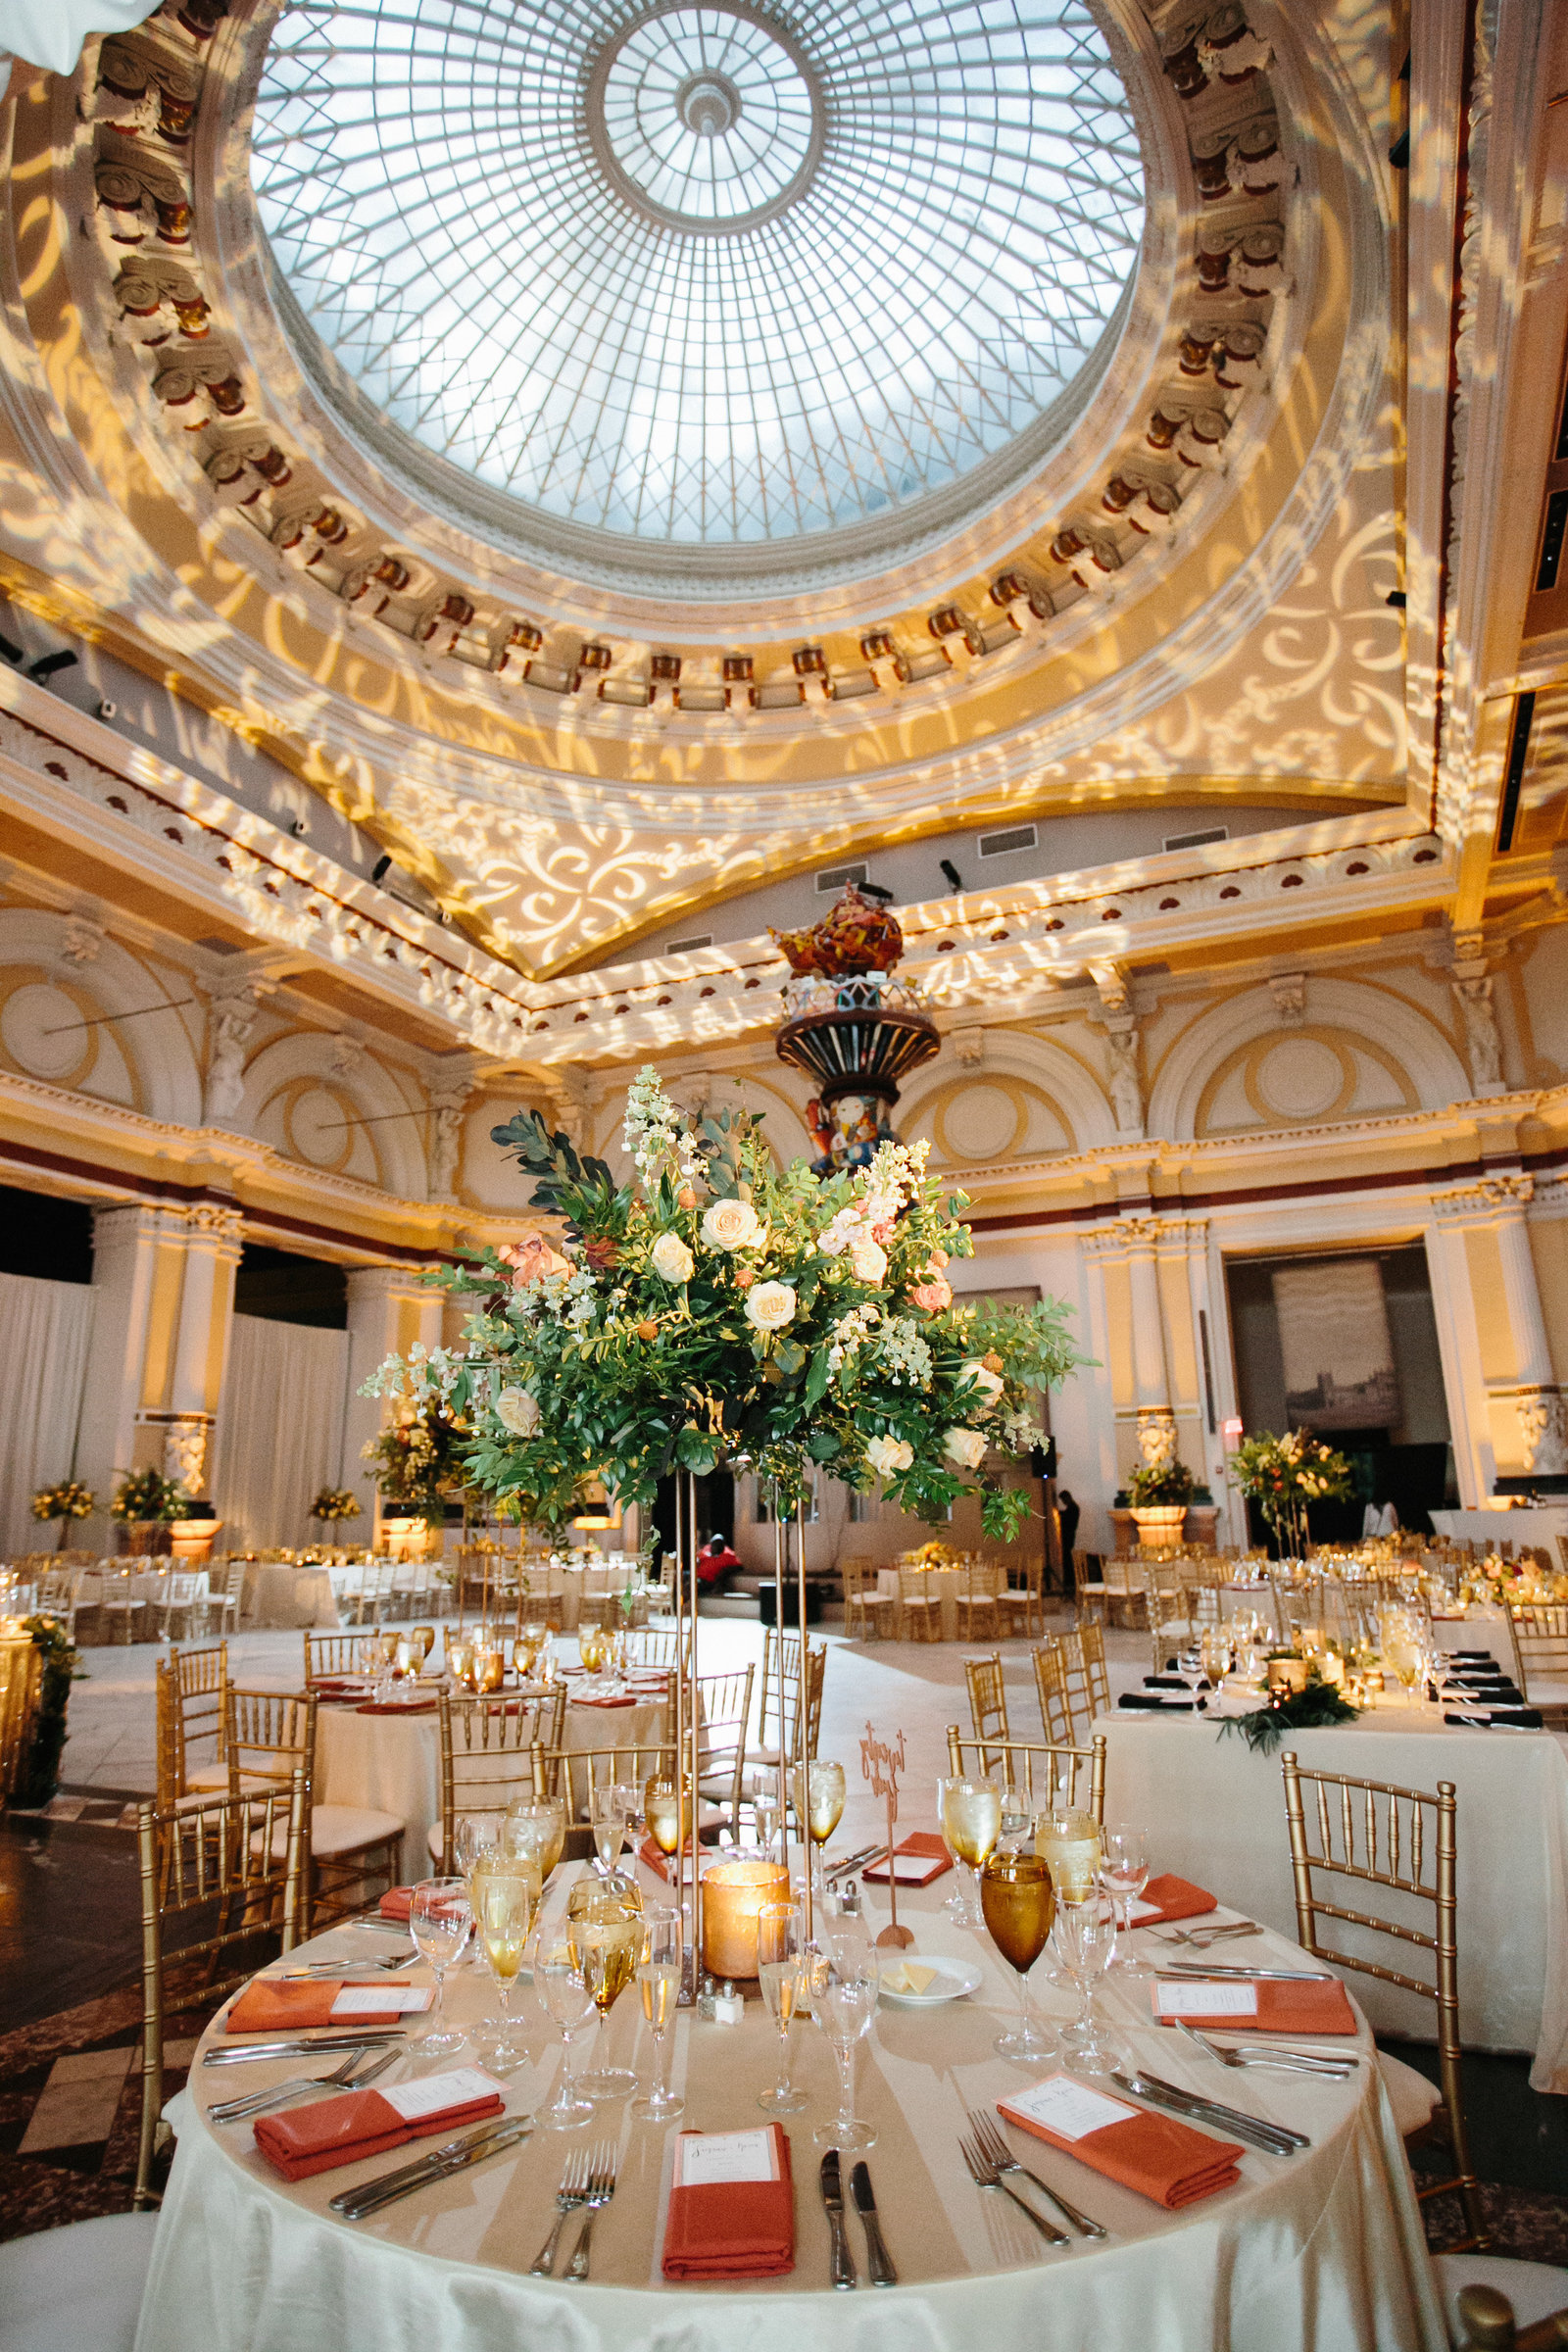 Elegant dining room for this Philadelphia Museum wedding!